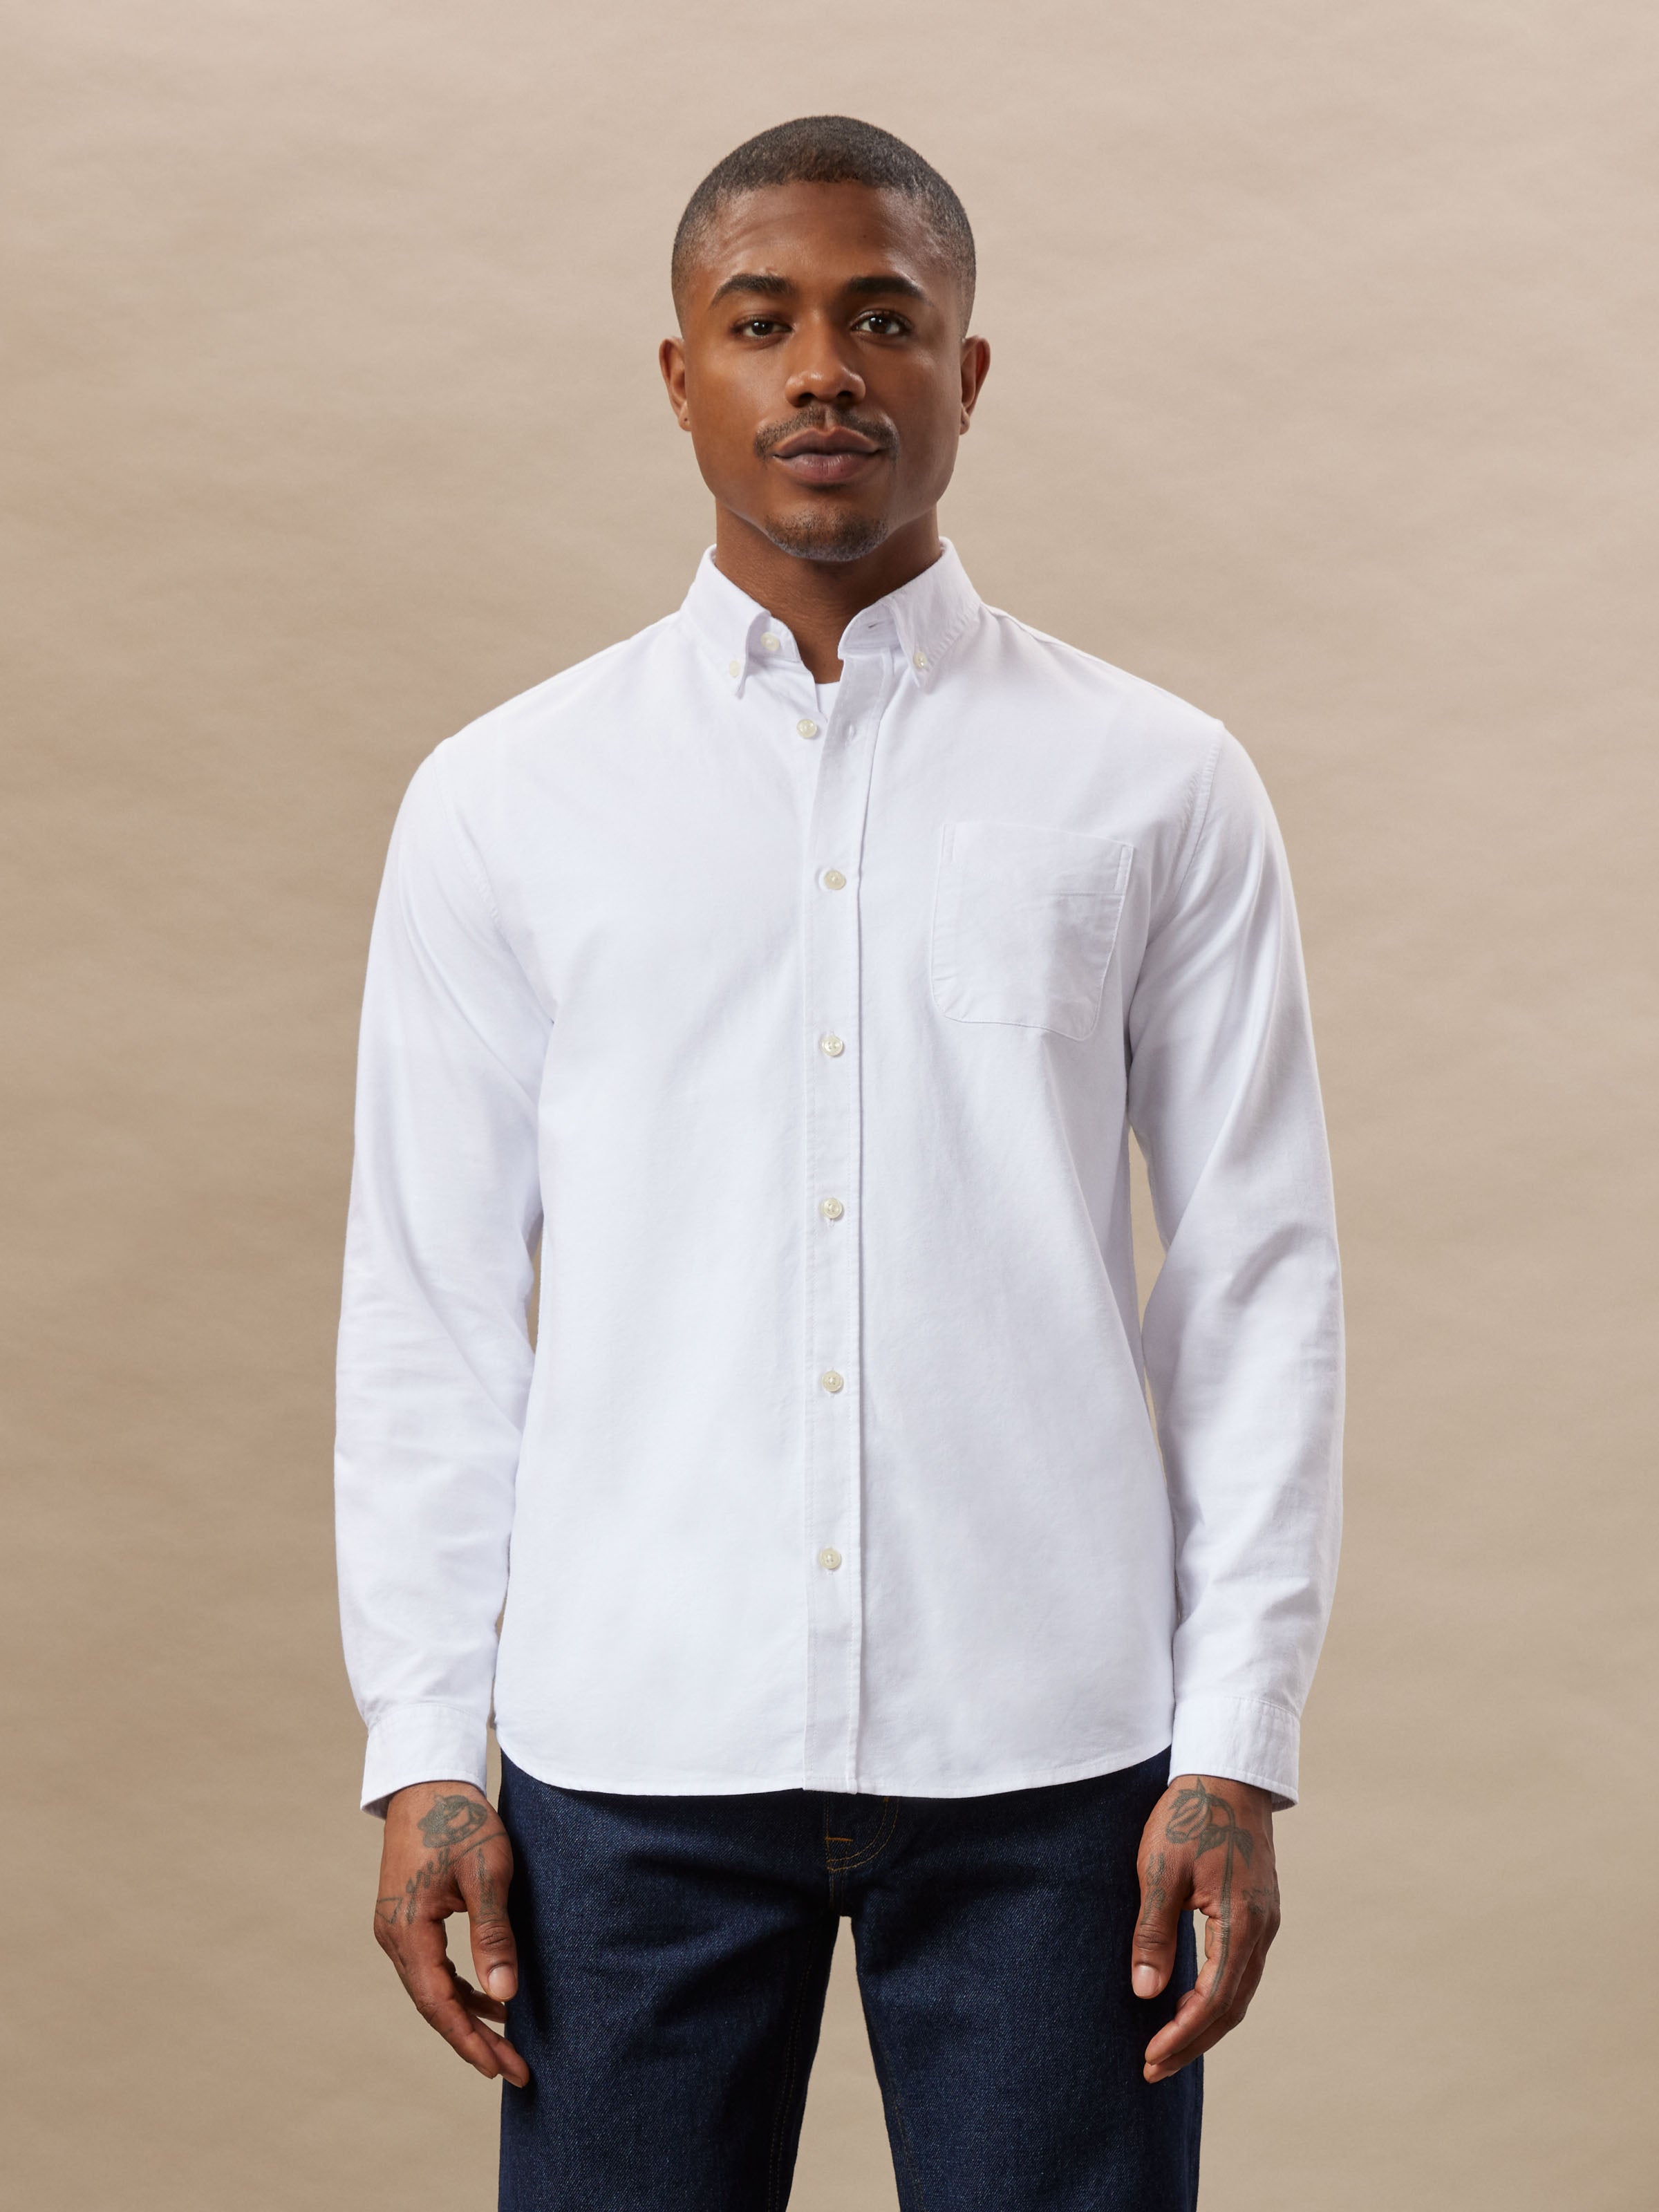 The New Oxford Shirt in 'Crisp White' Organic Cotton